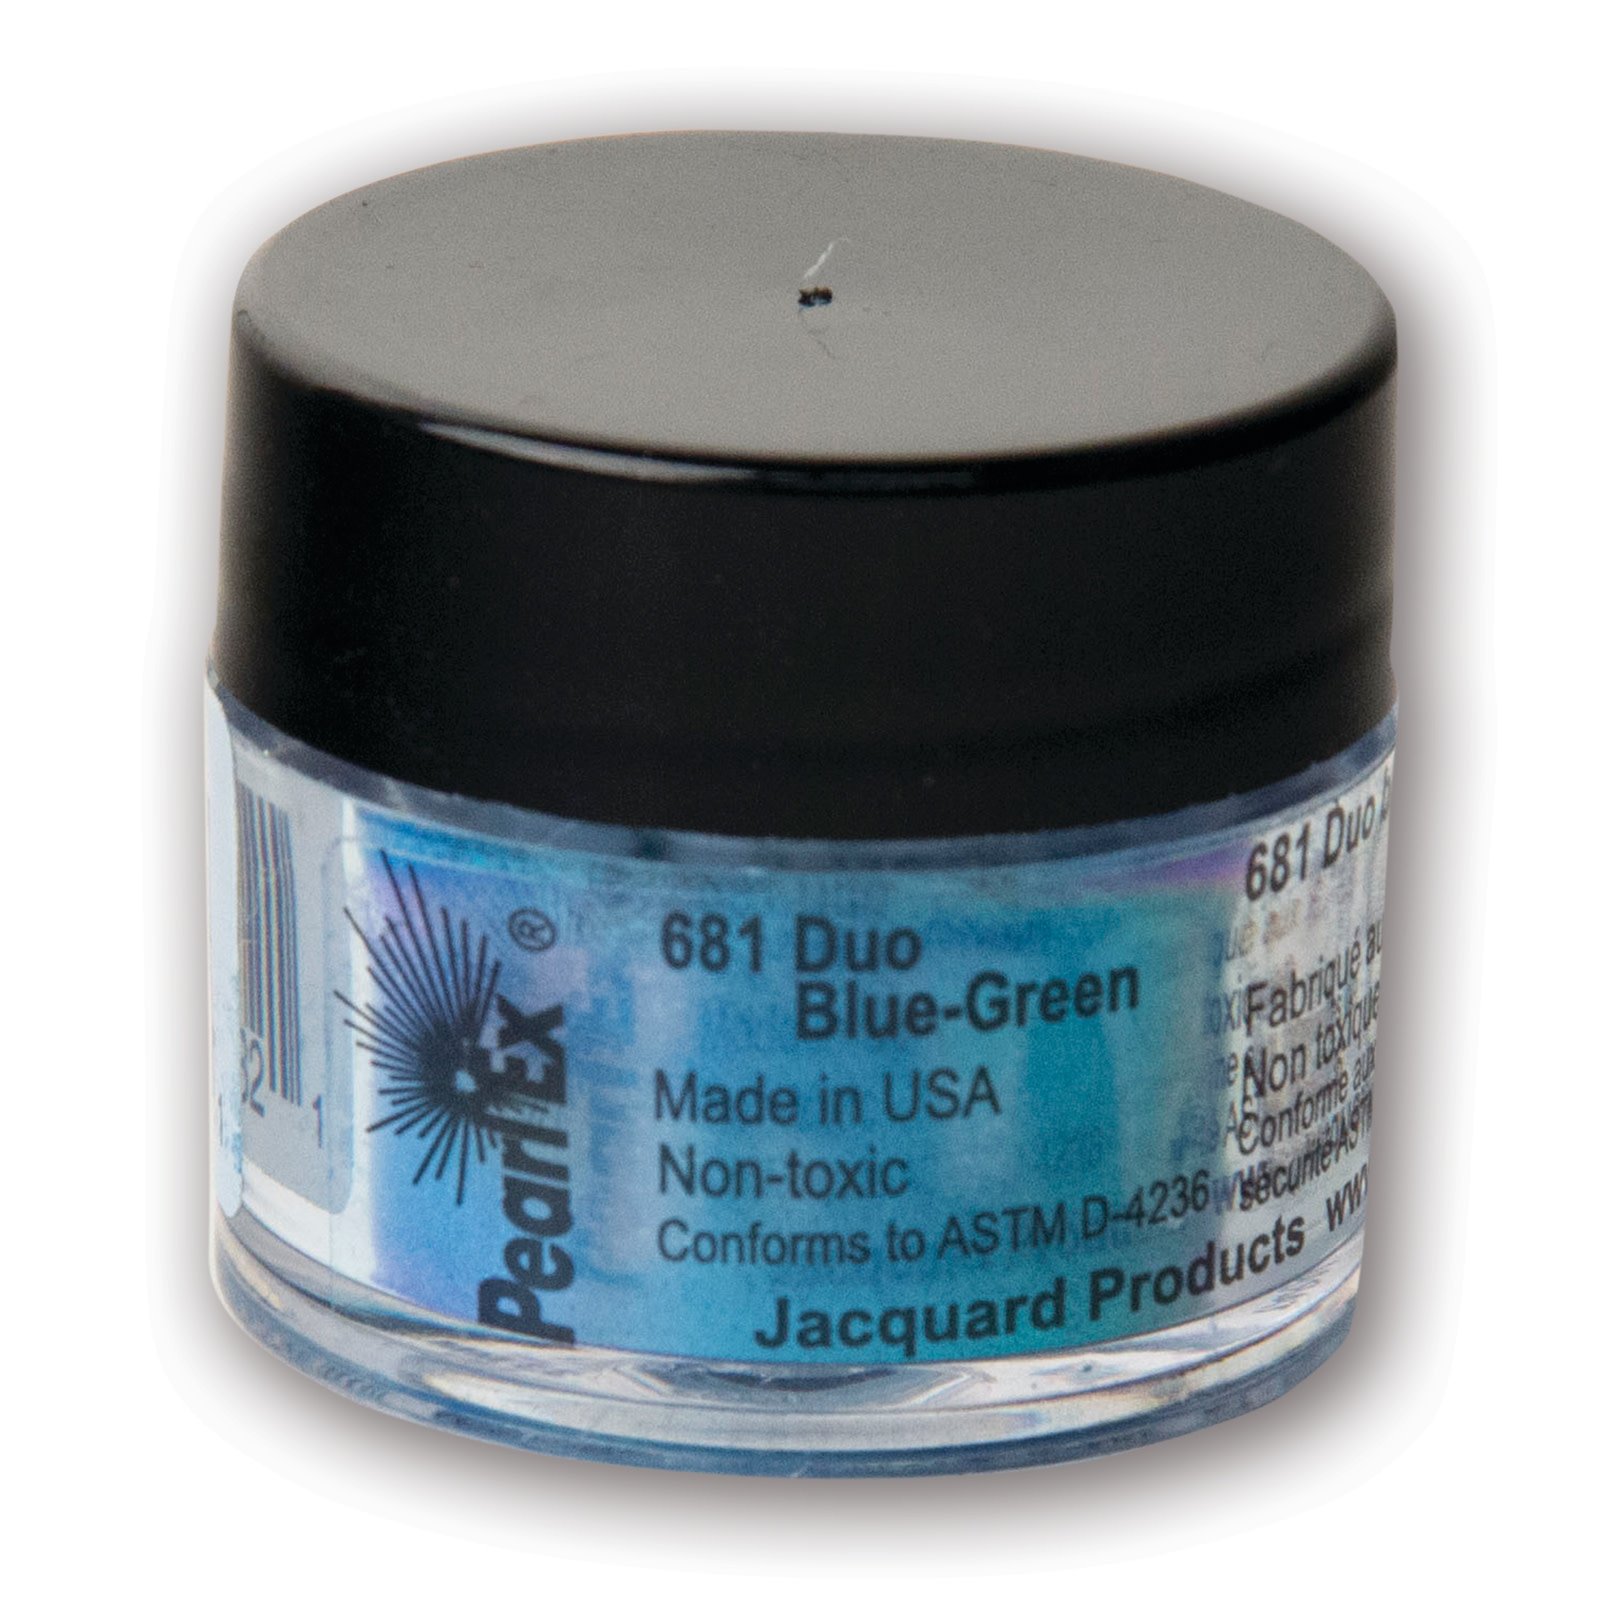 Jacquard Pearl Ex Powdered Pigment, 3g Jar, Duo Blue/Green